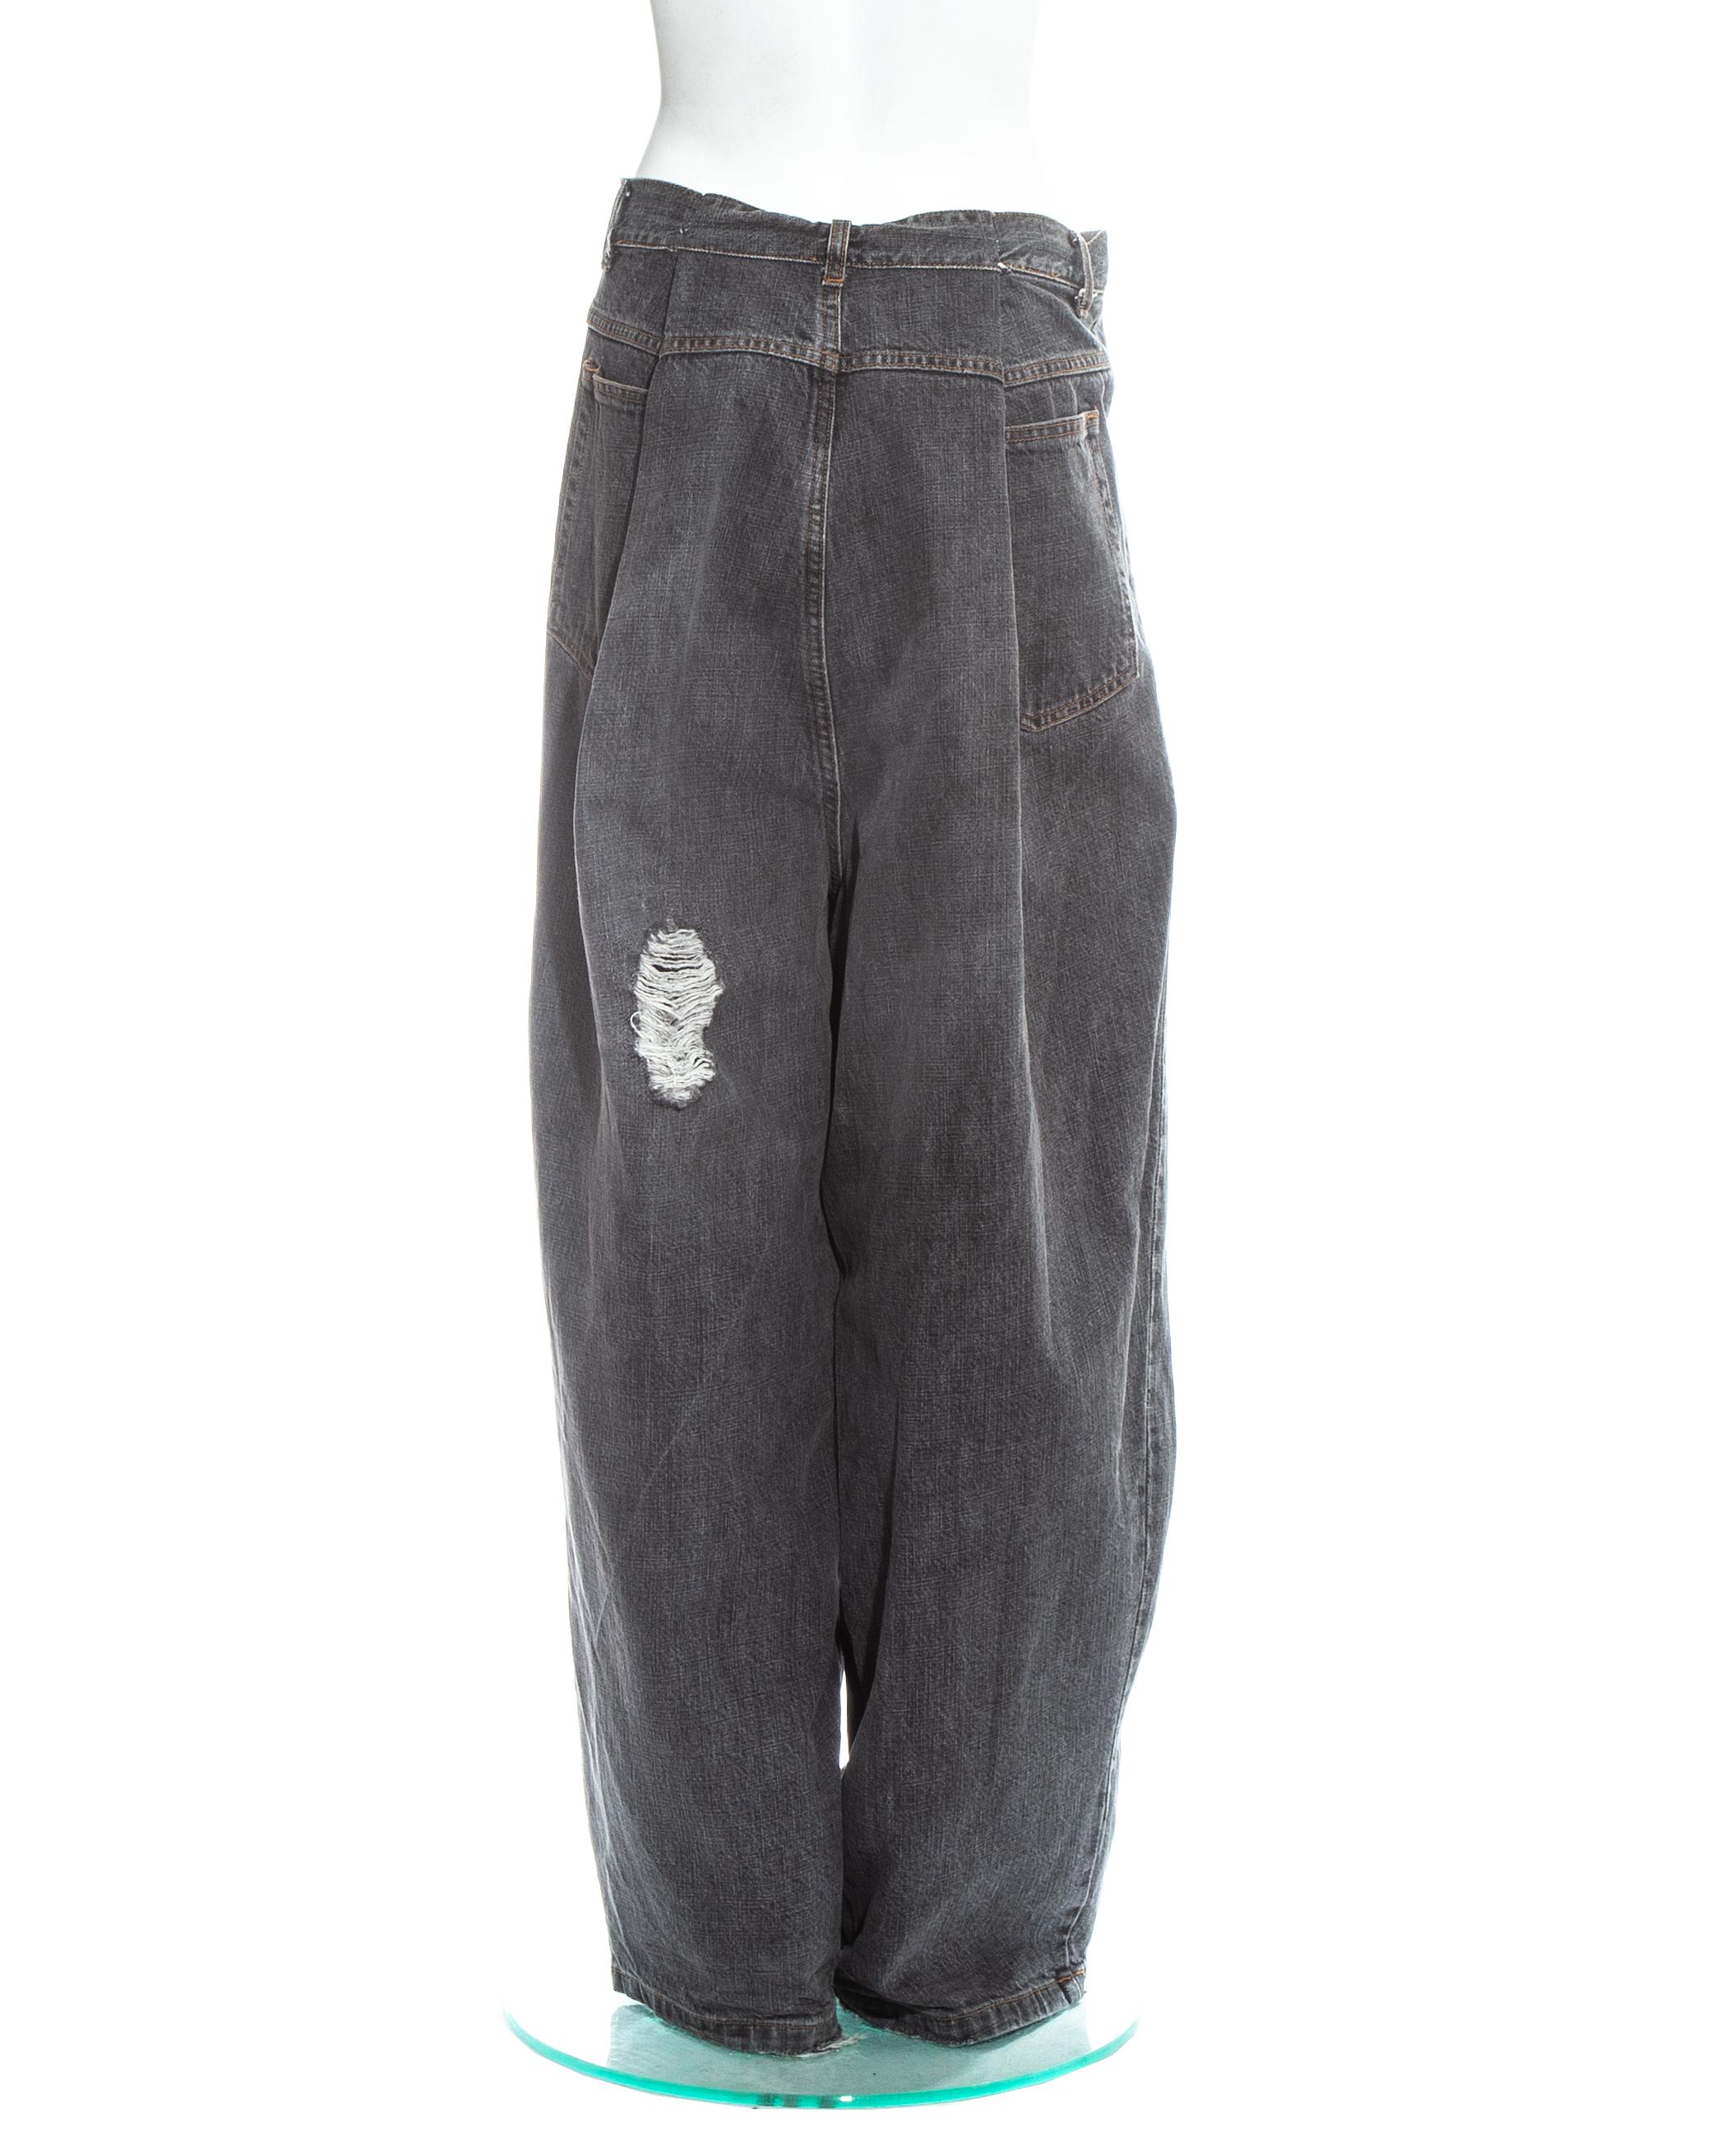 Margiela grey denim oversized size 78 jeans, fw 2000 For Sale 2